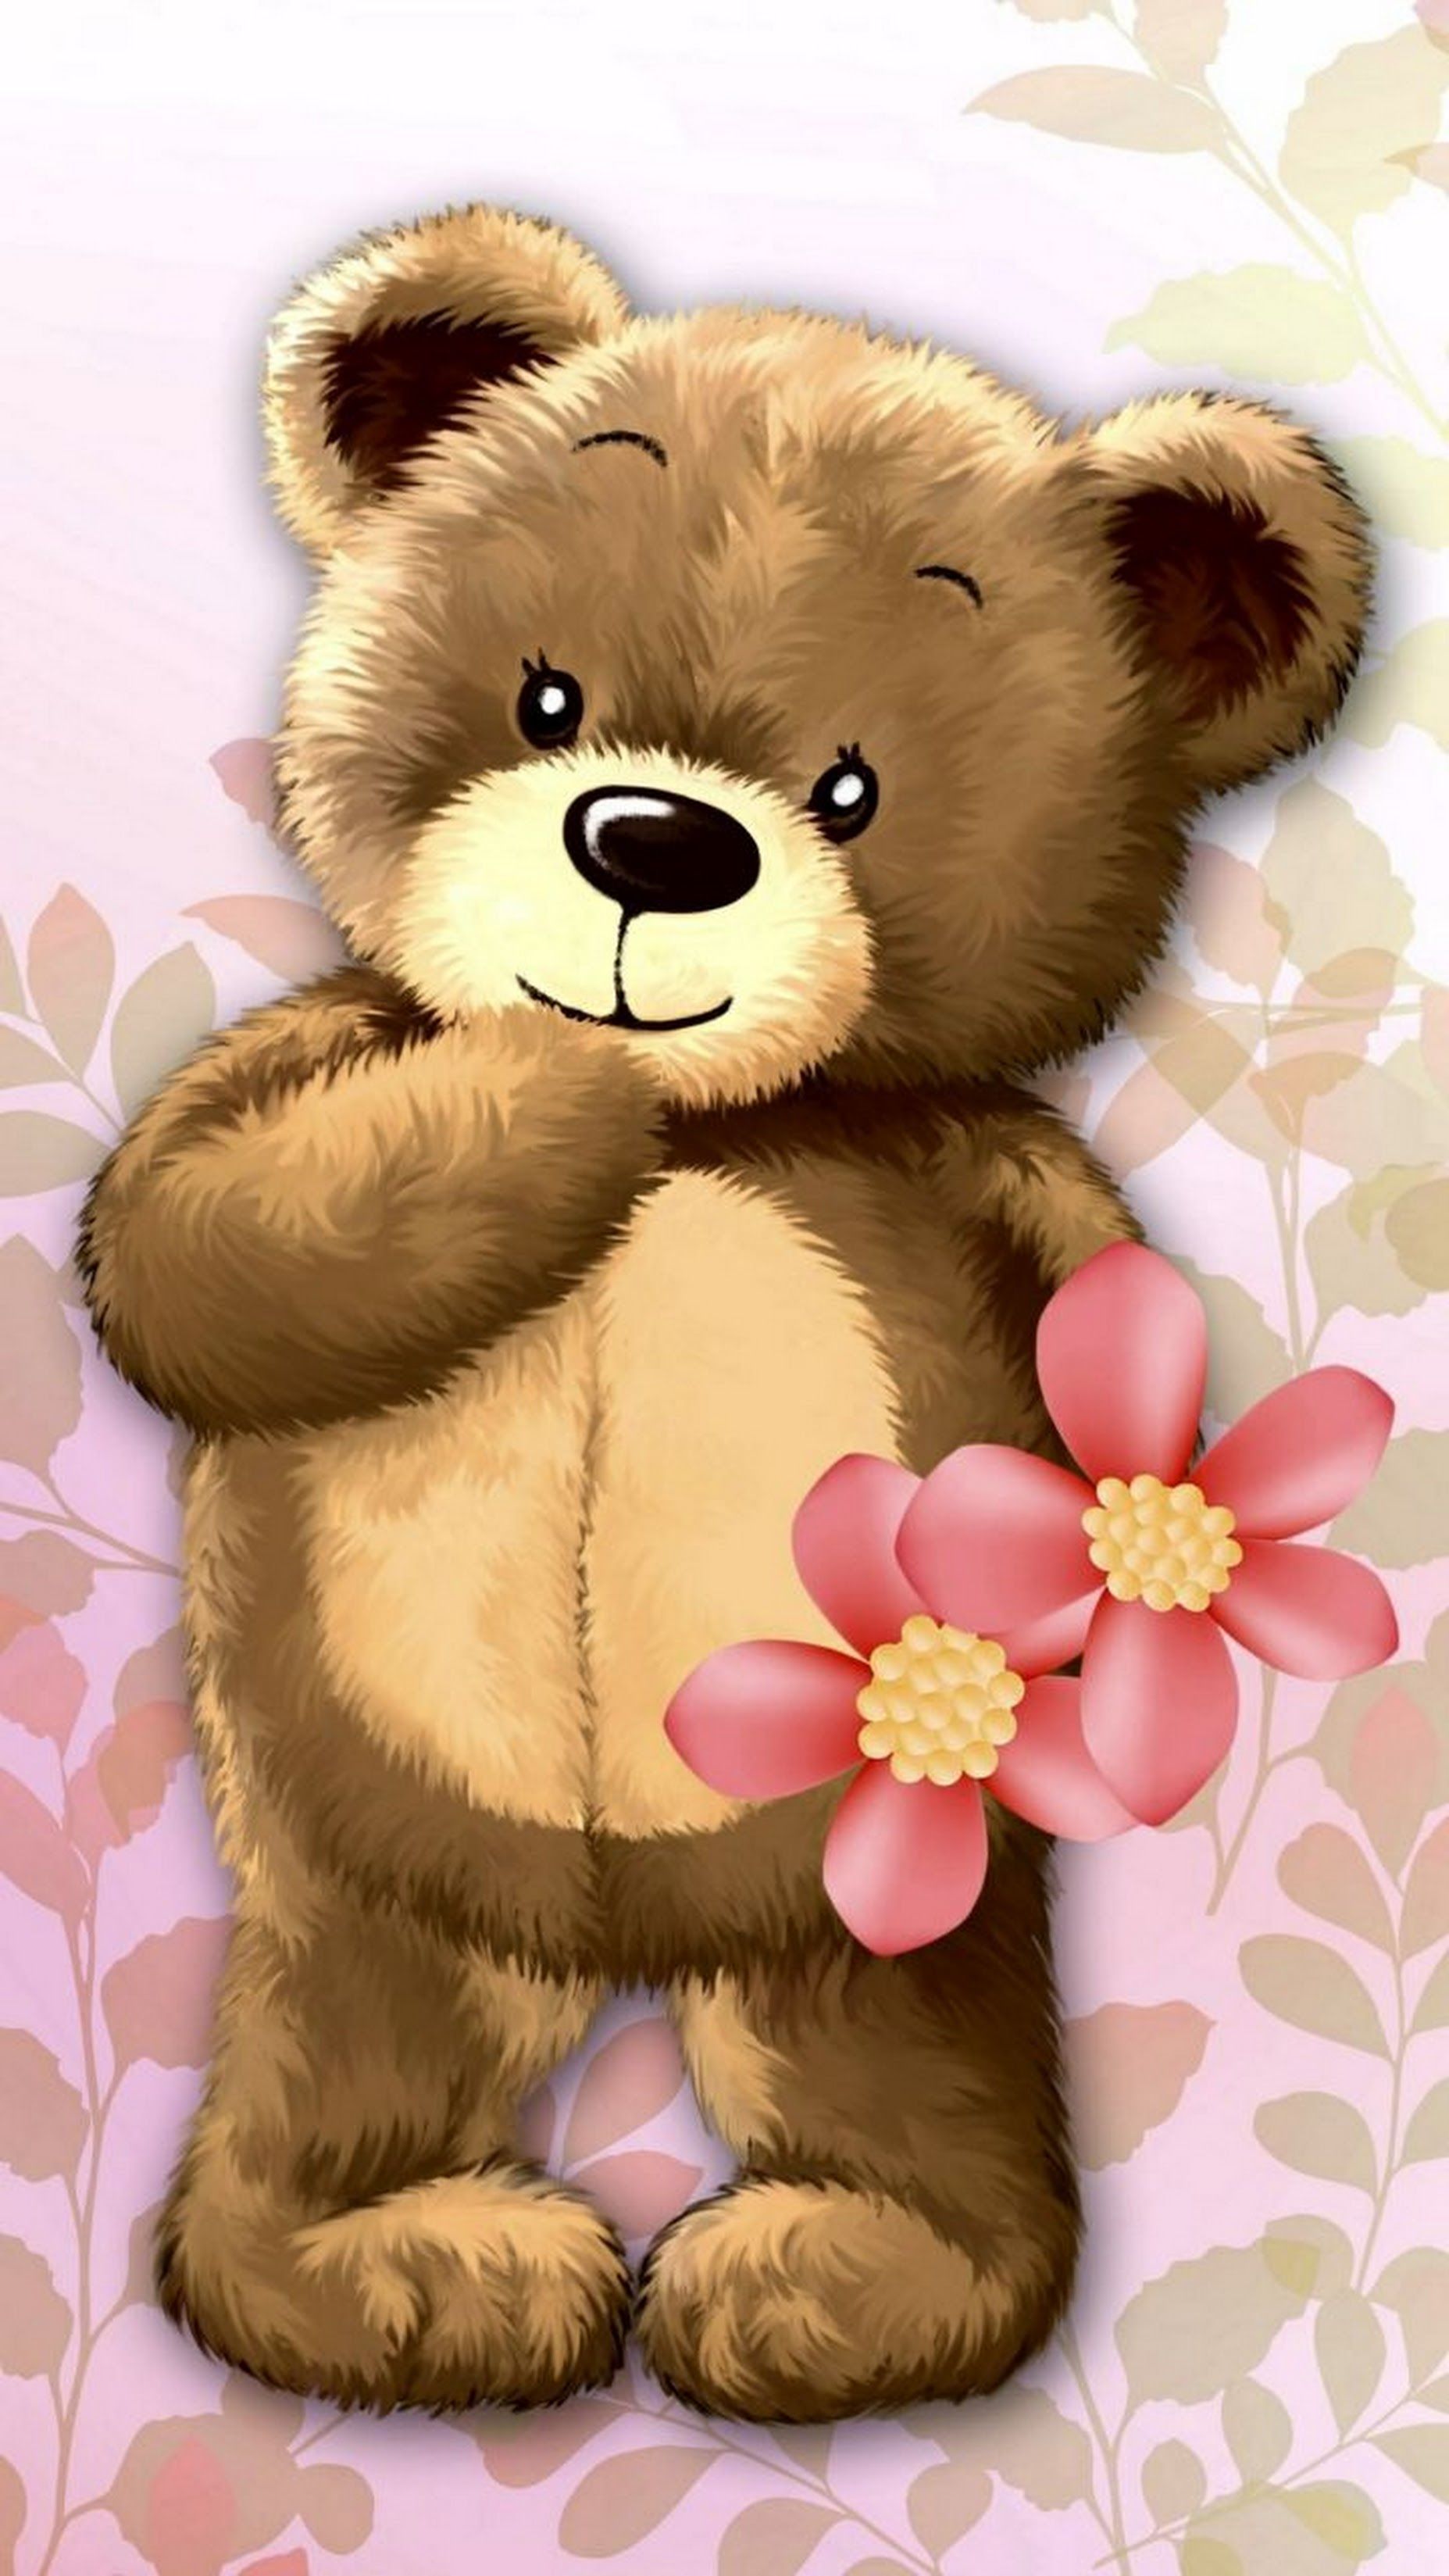 Cute Teddy Bear Phone Wallpapers - Wallpaper Cave